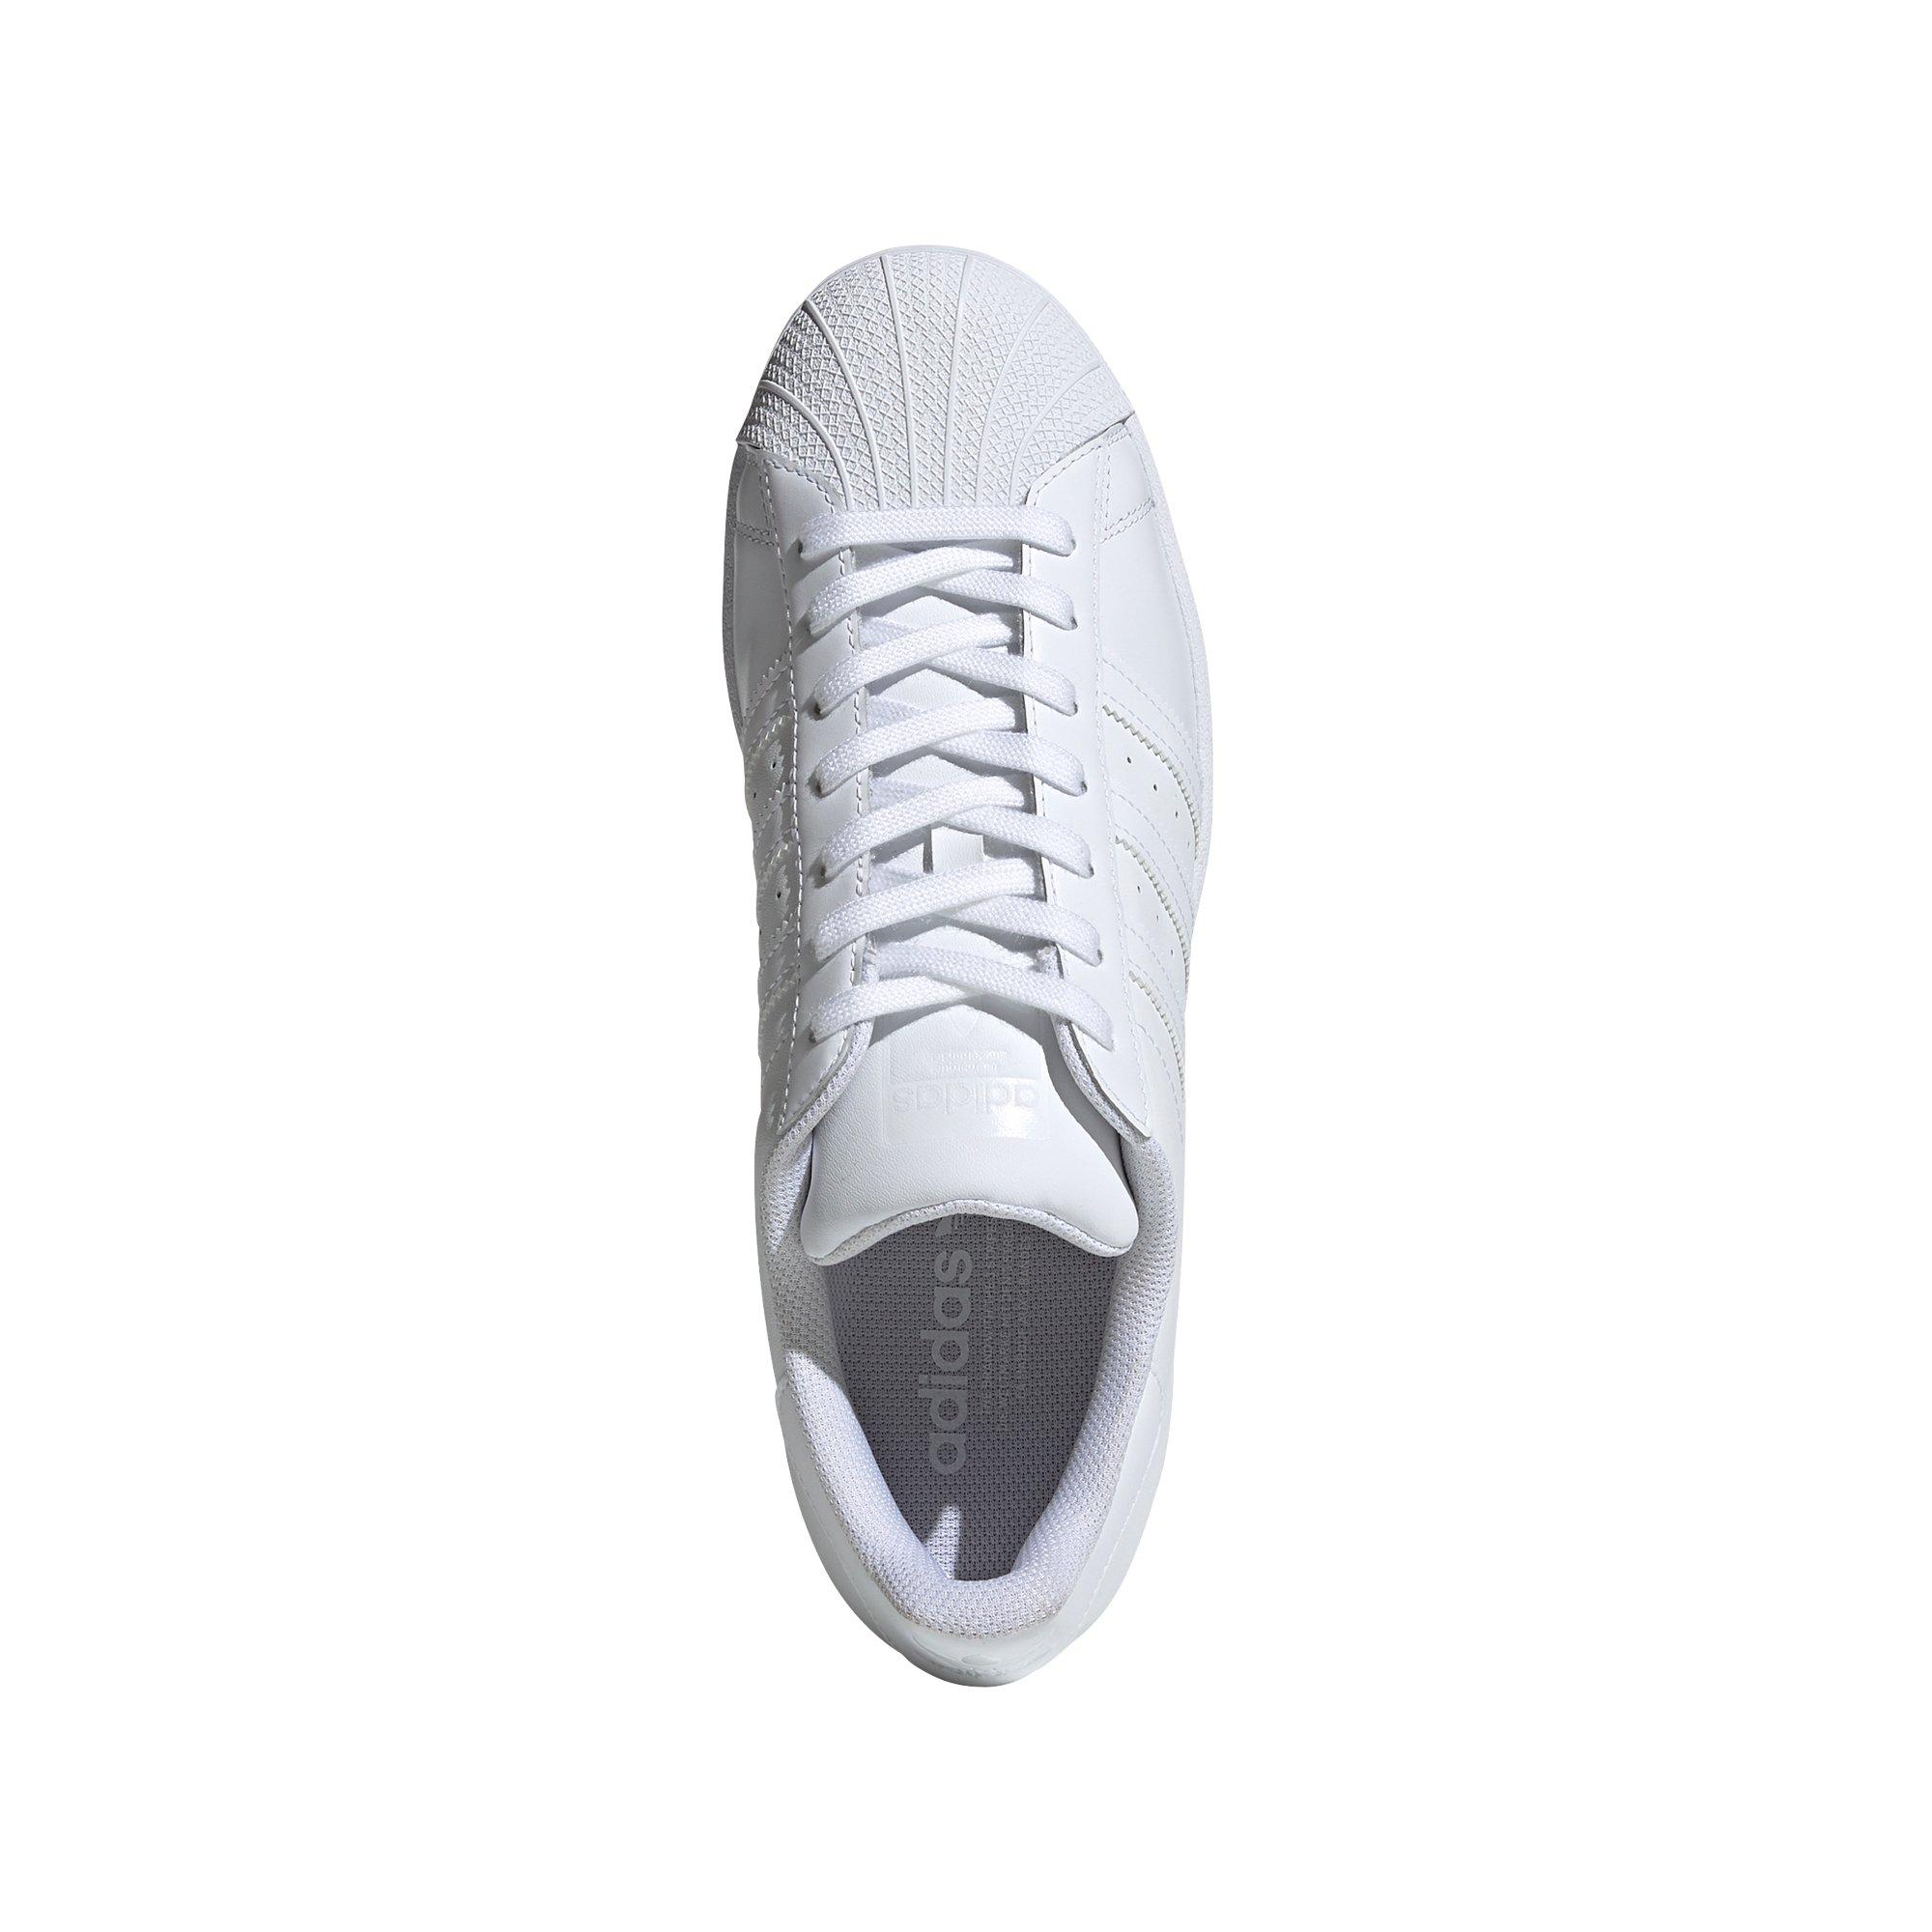 regiment Banzai opvolger adidas Superstar "White" Men's Shoe